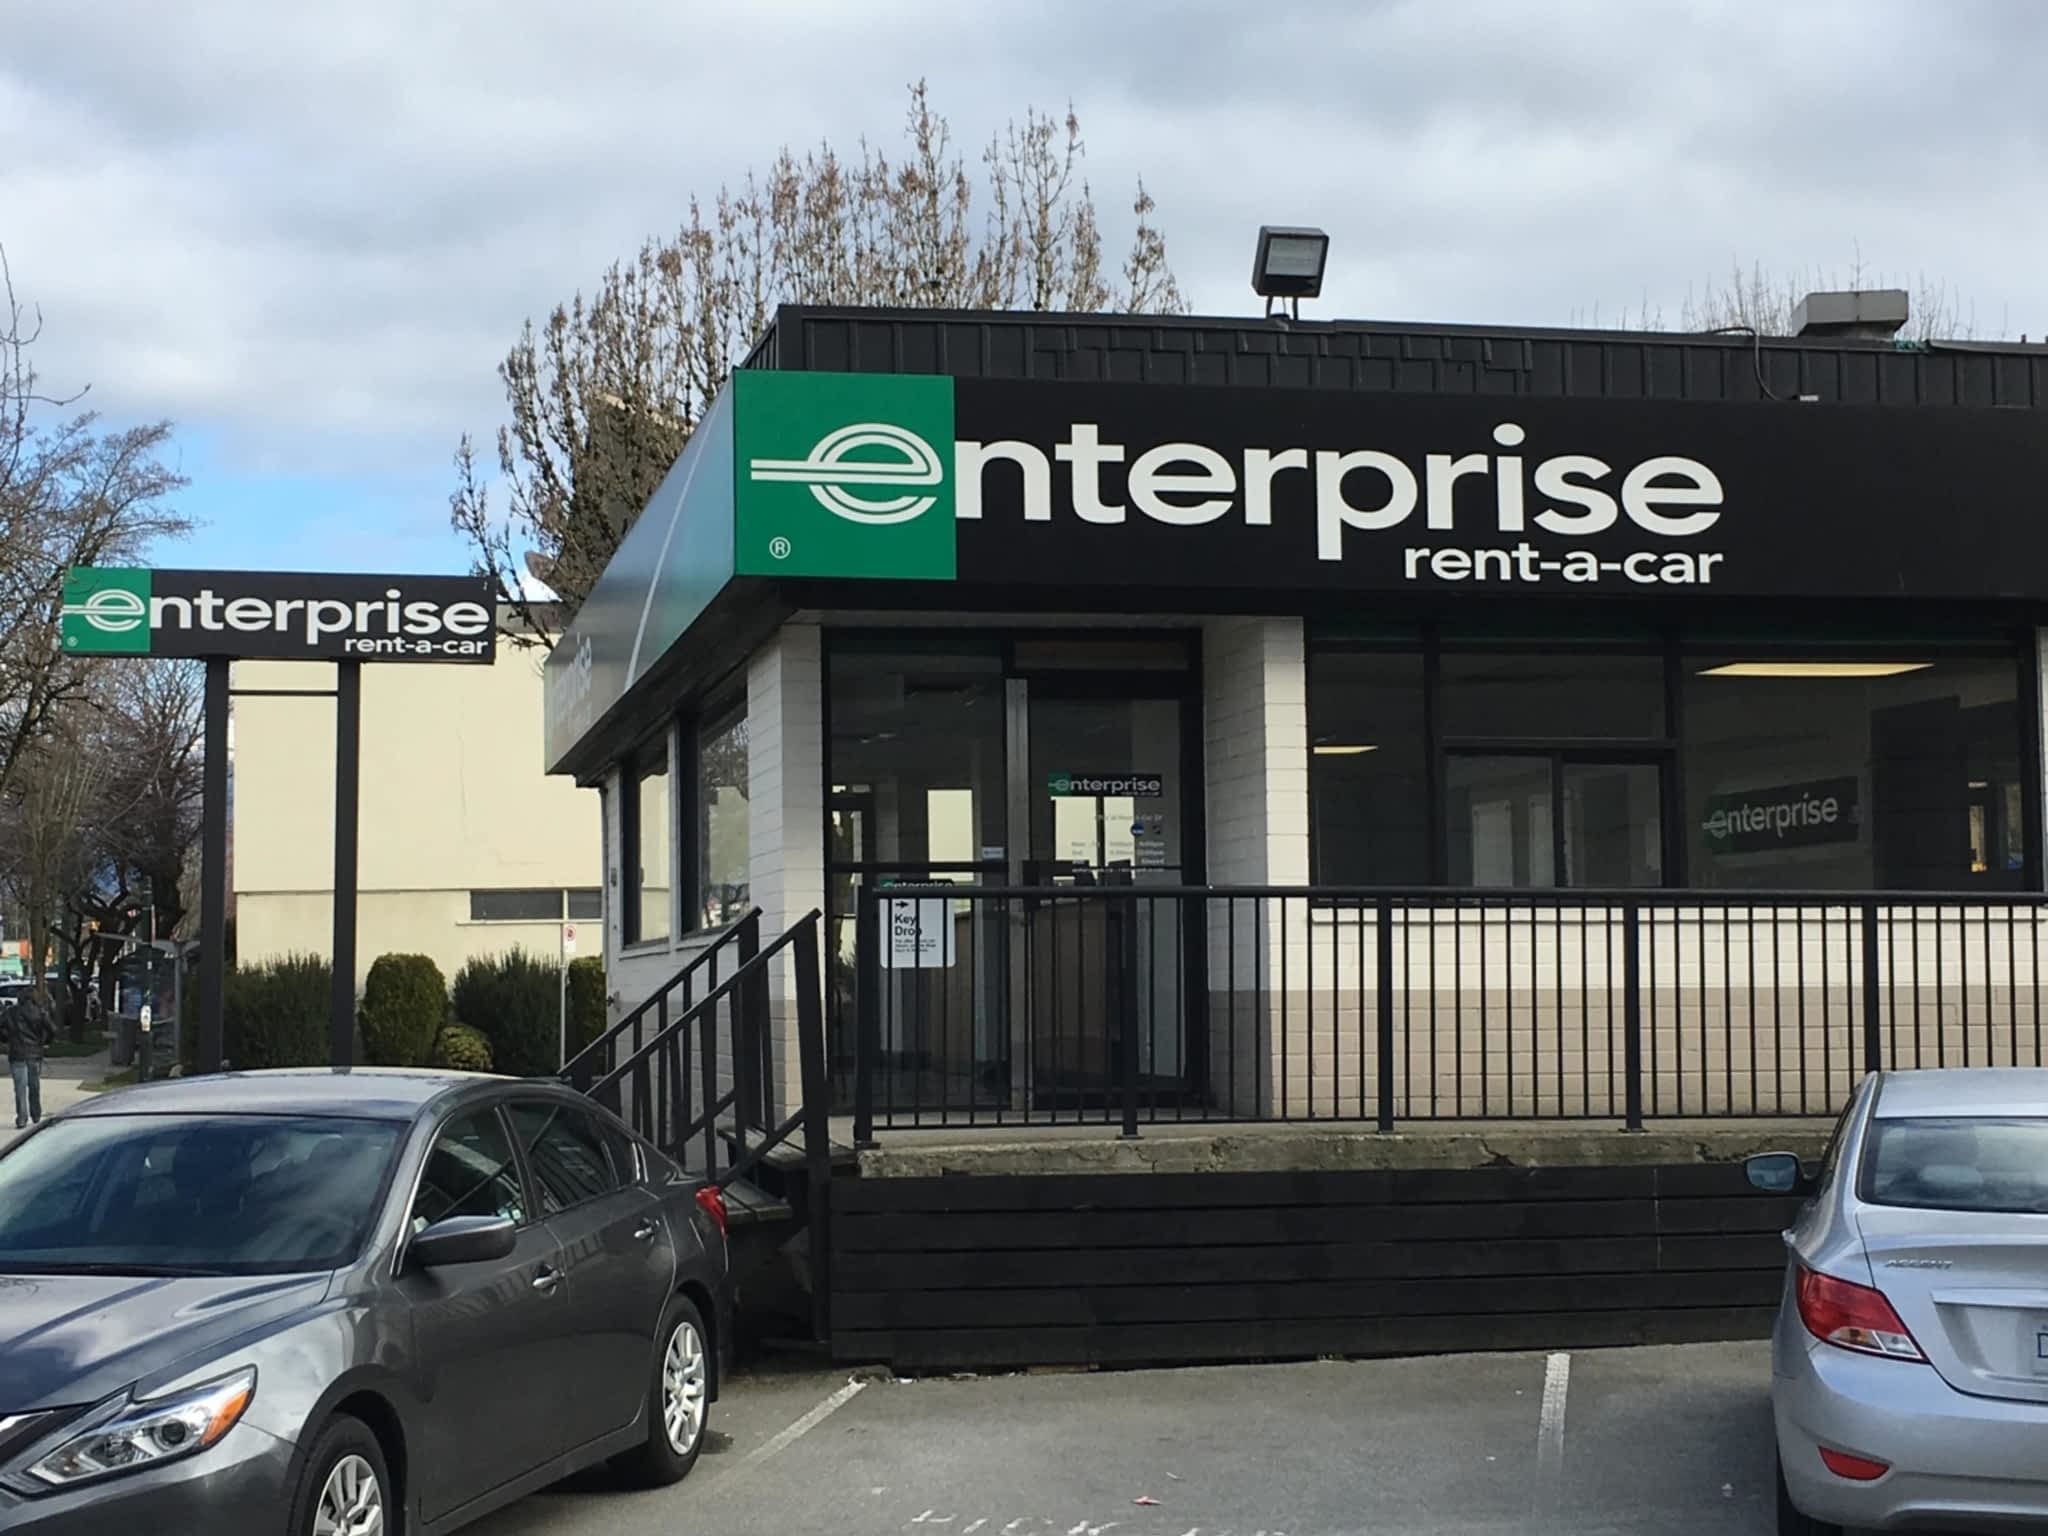 Enterprise car rental jobs in edmonton